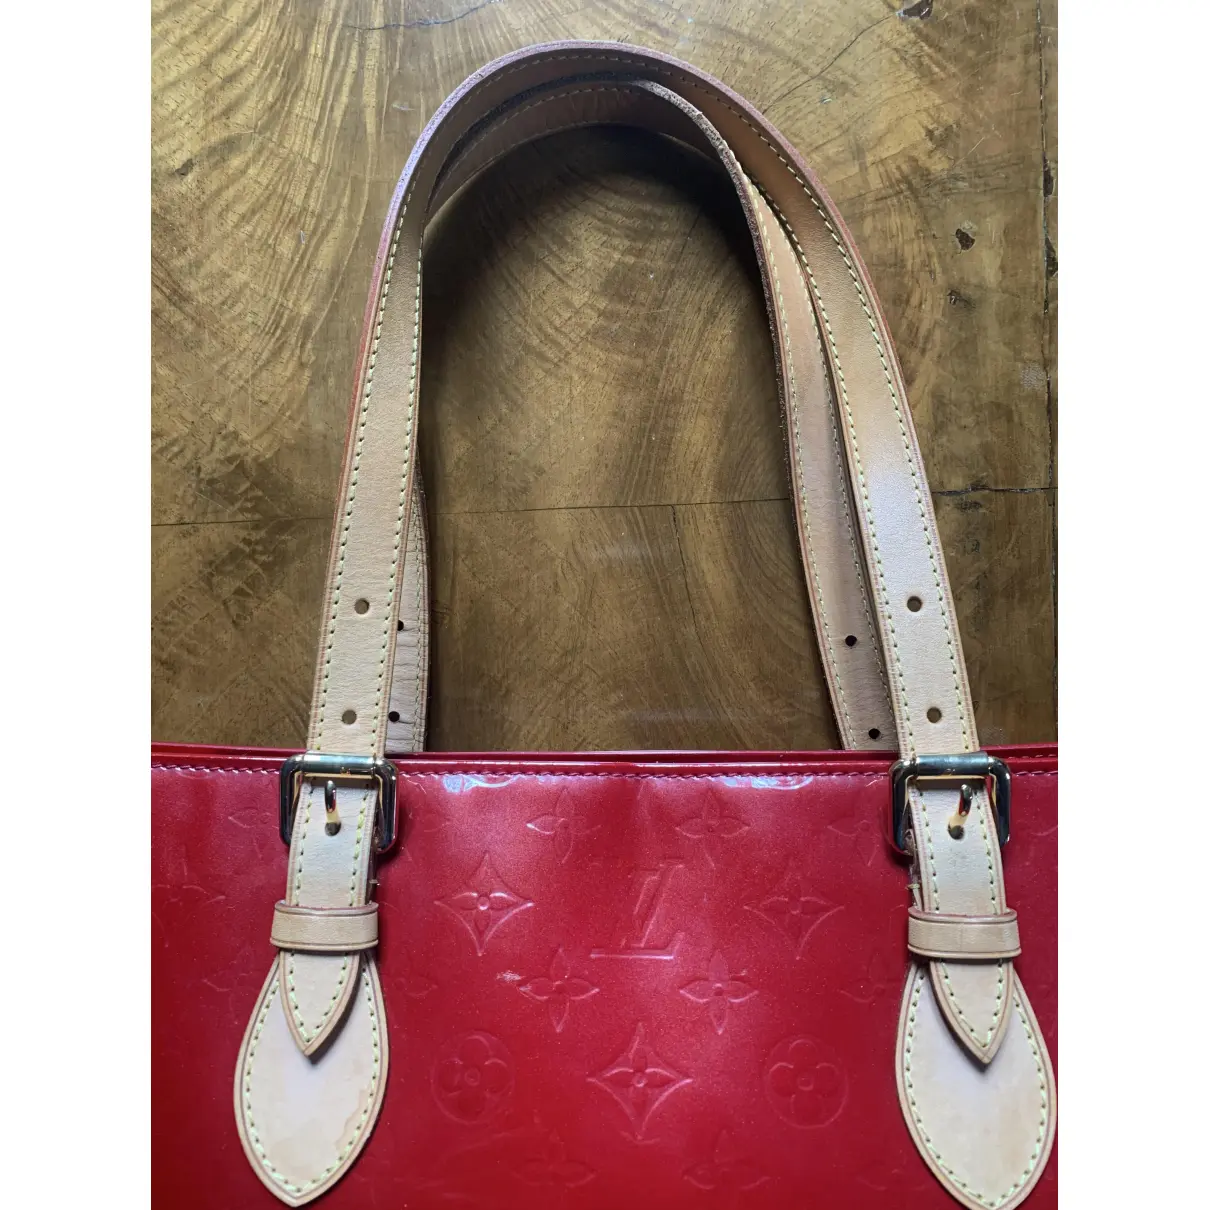 Brentwood patent leather handbag Louis Vuitton